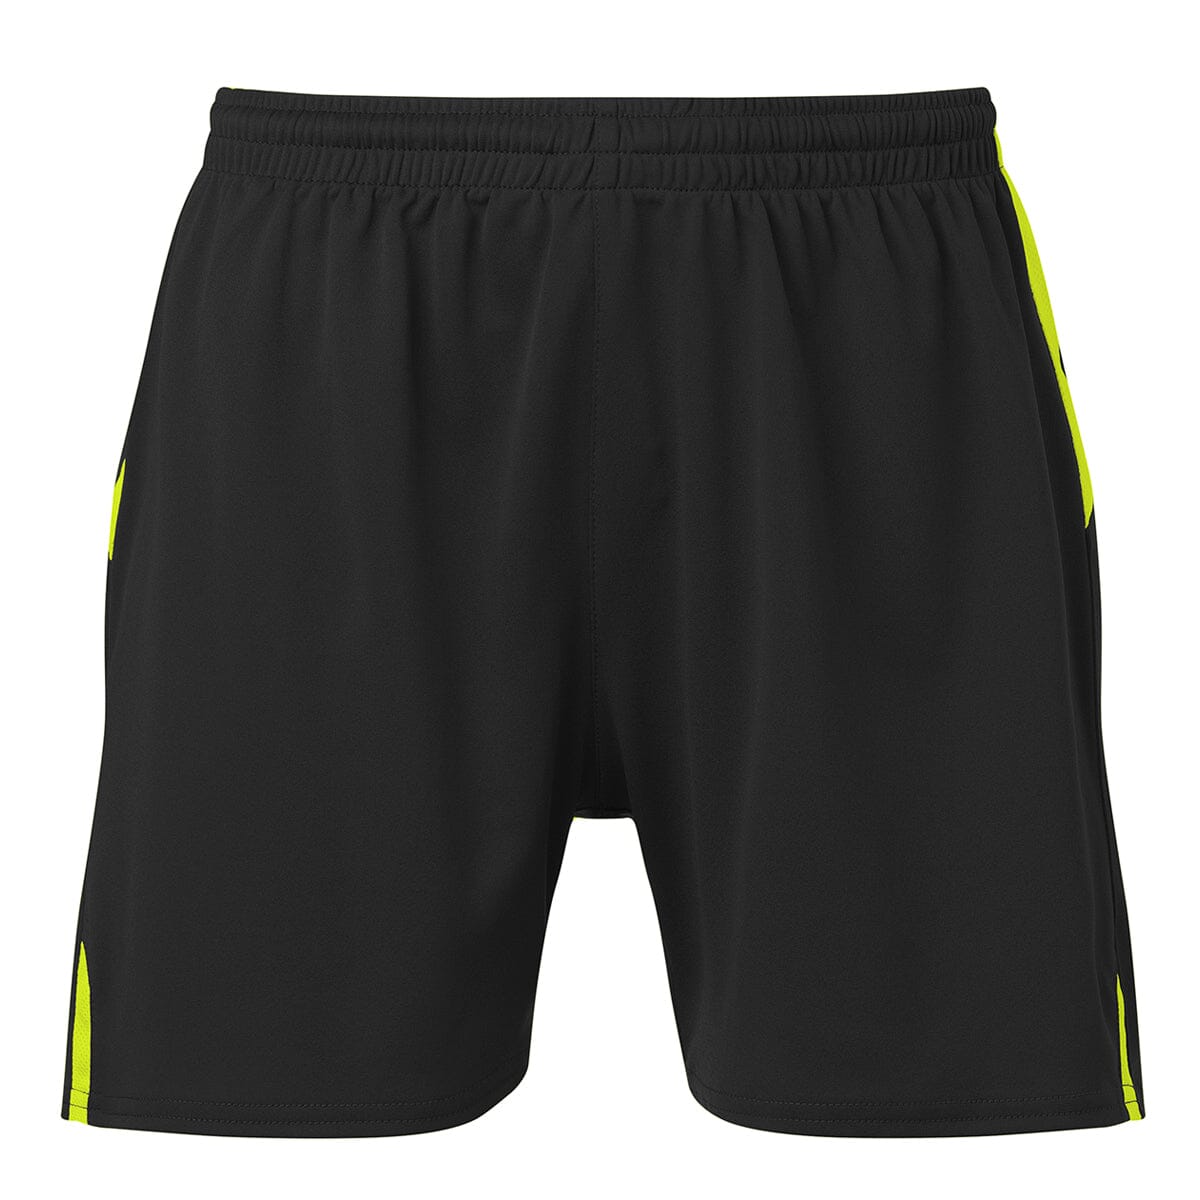 Continental Short - Female Short Xara Soccer Black/Fl. Green Womens Extra Large 